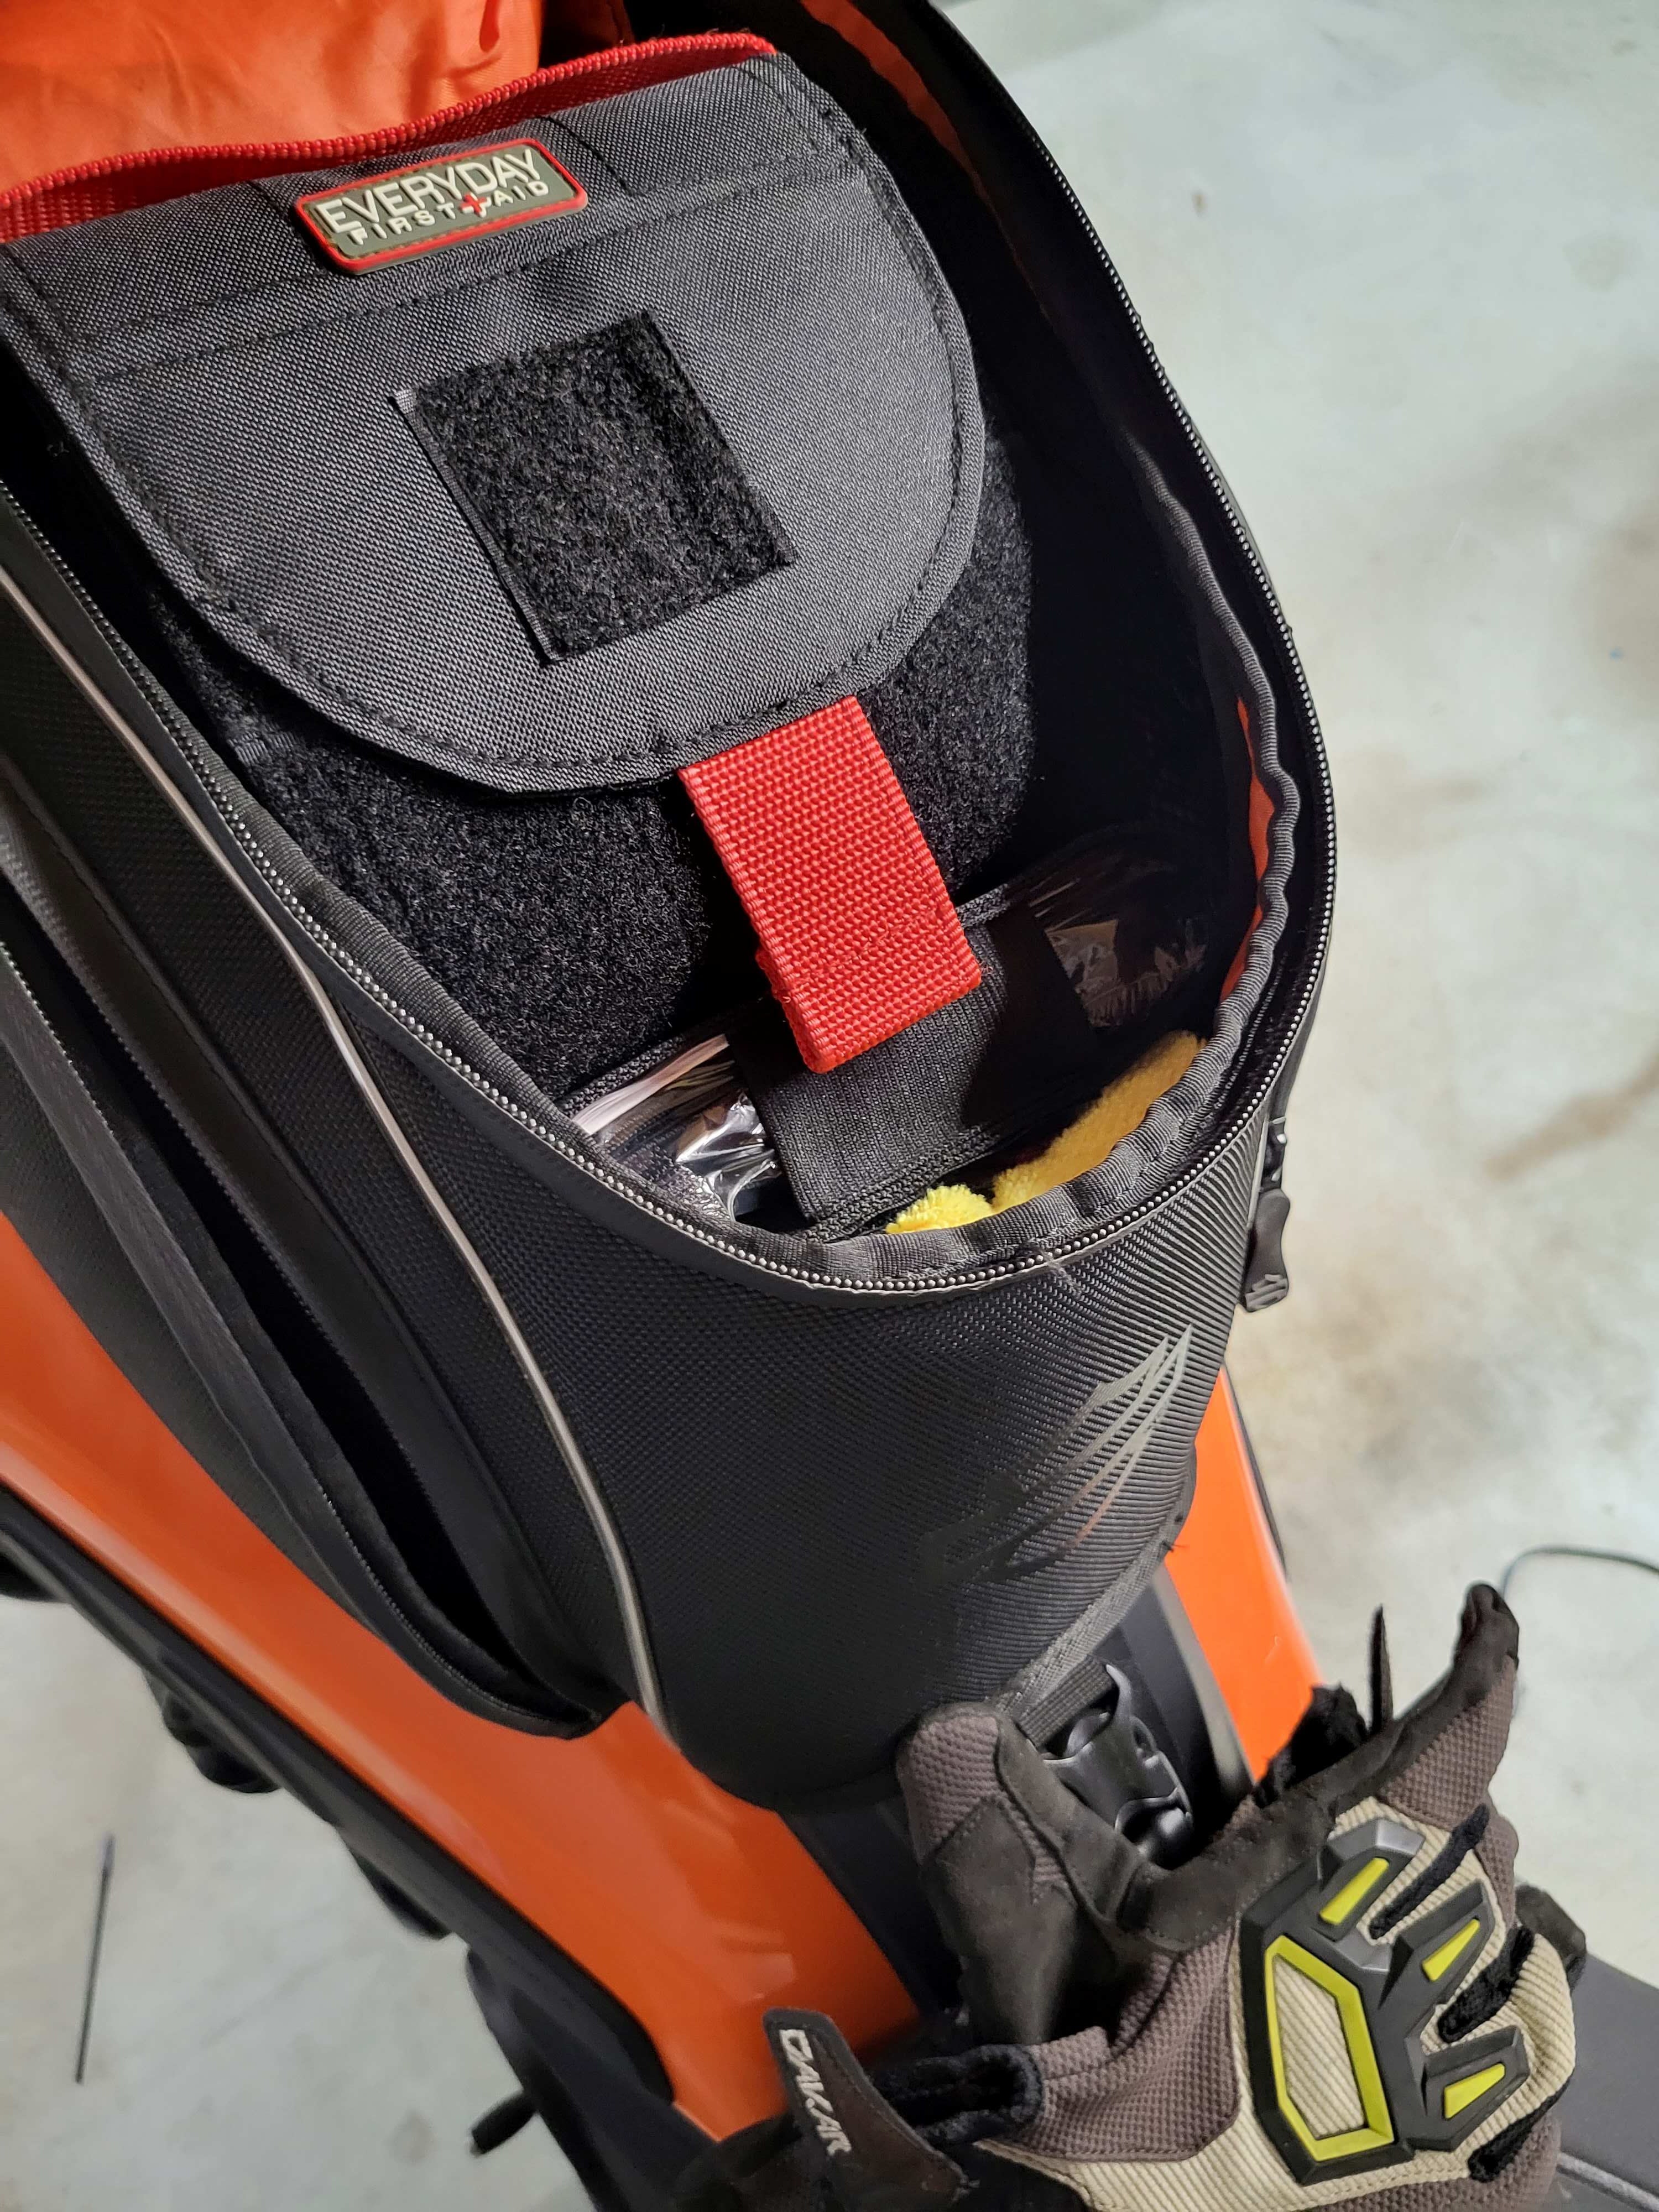 Black motorcycle first aid kit inside tank bag